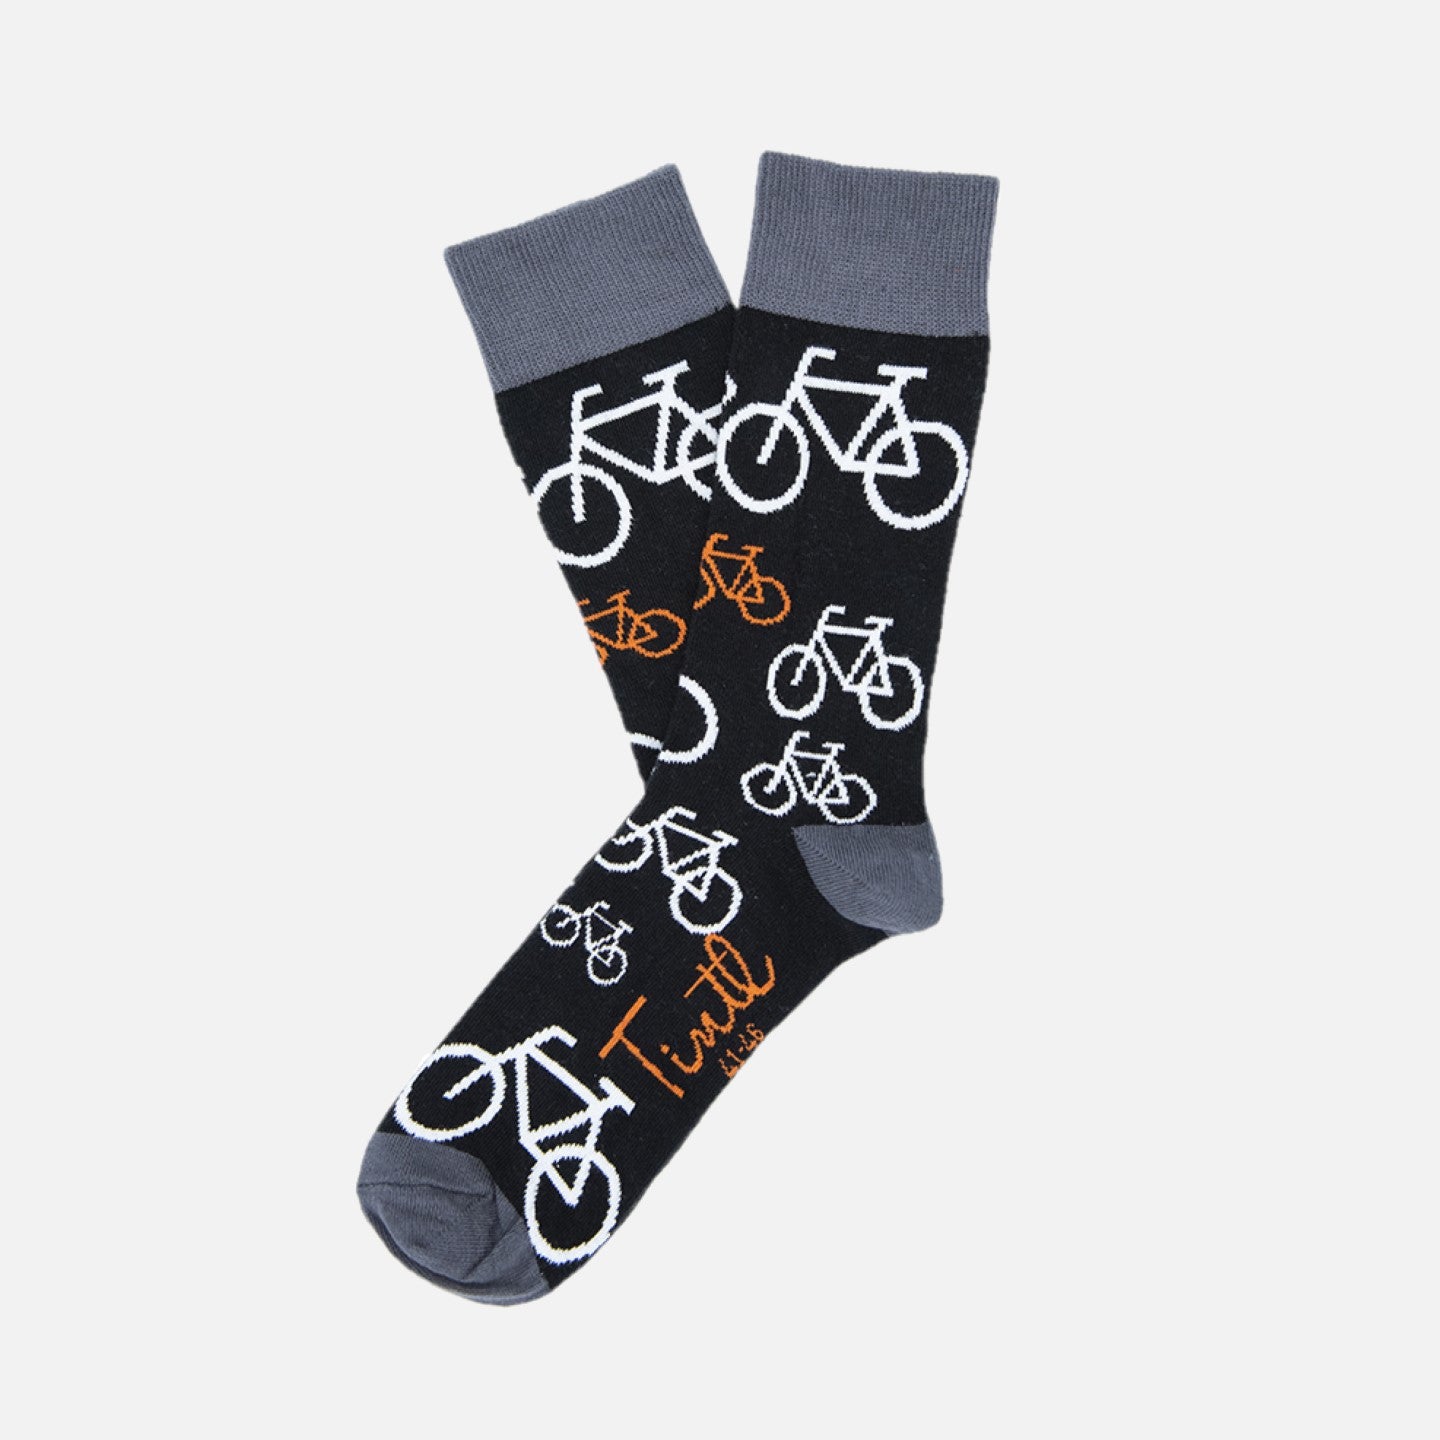 Socken, Baumwolle mit Fahrrad-Motiv